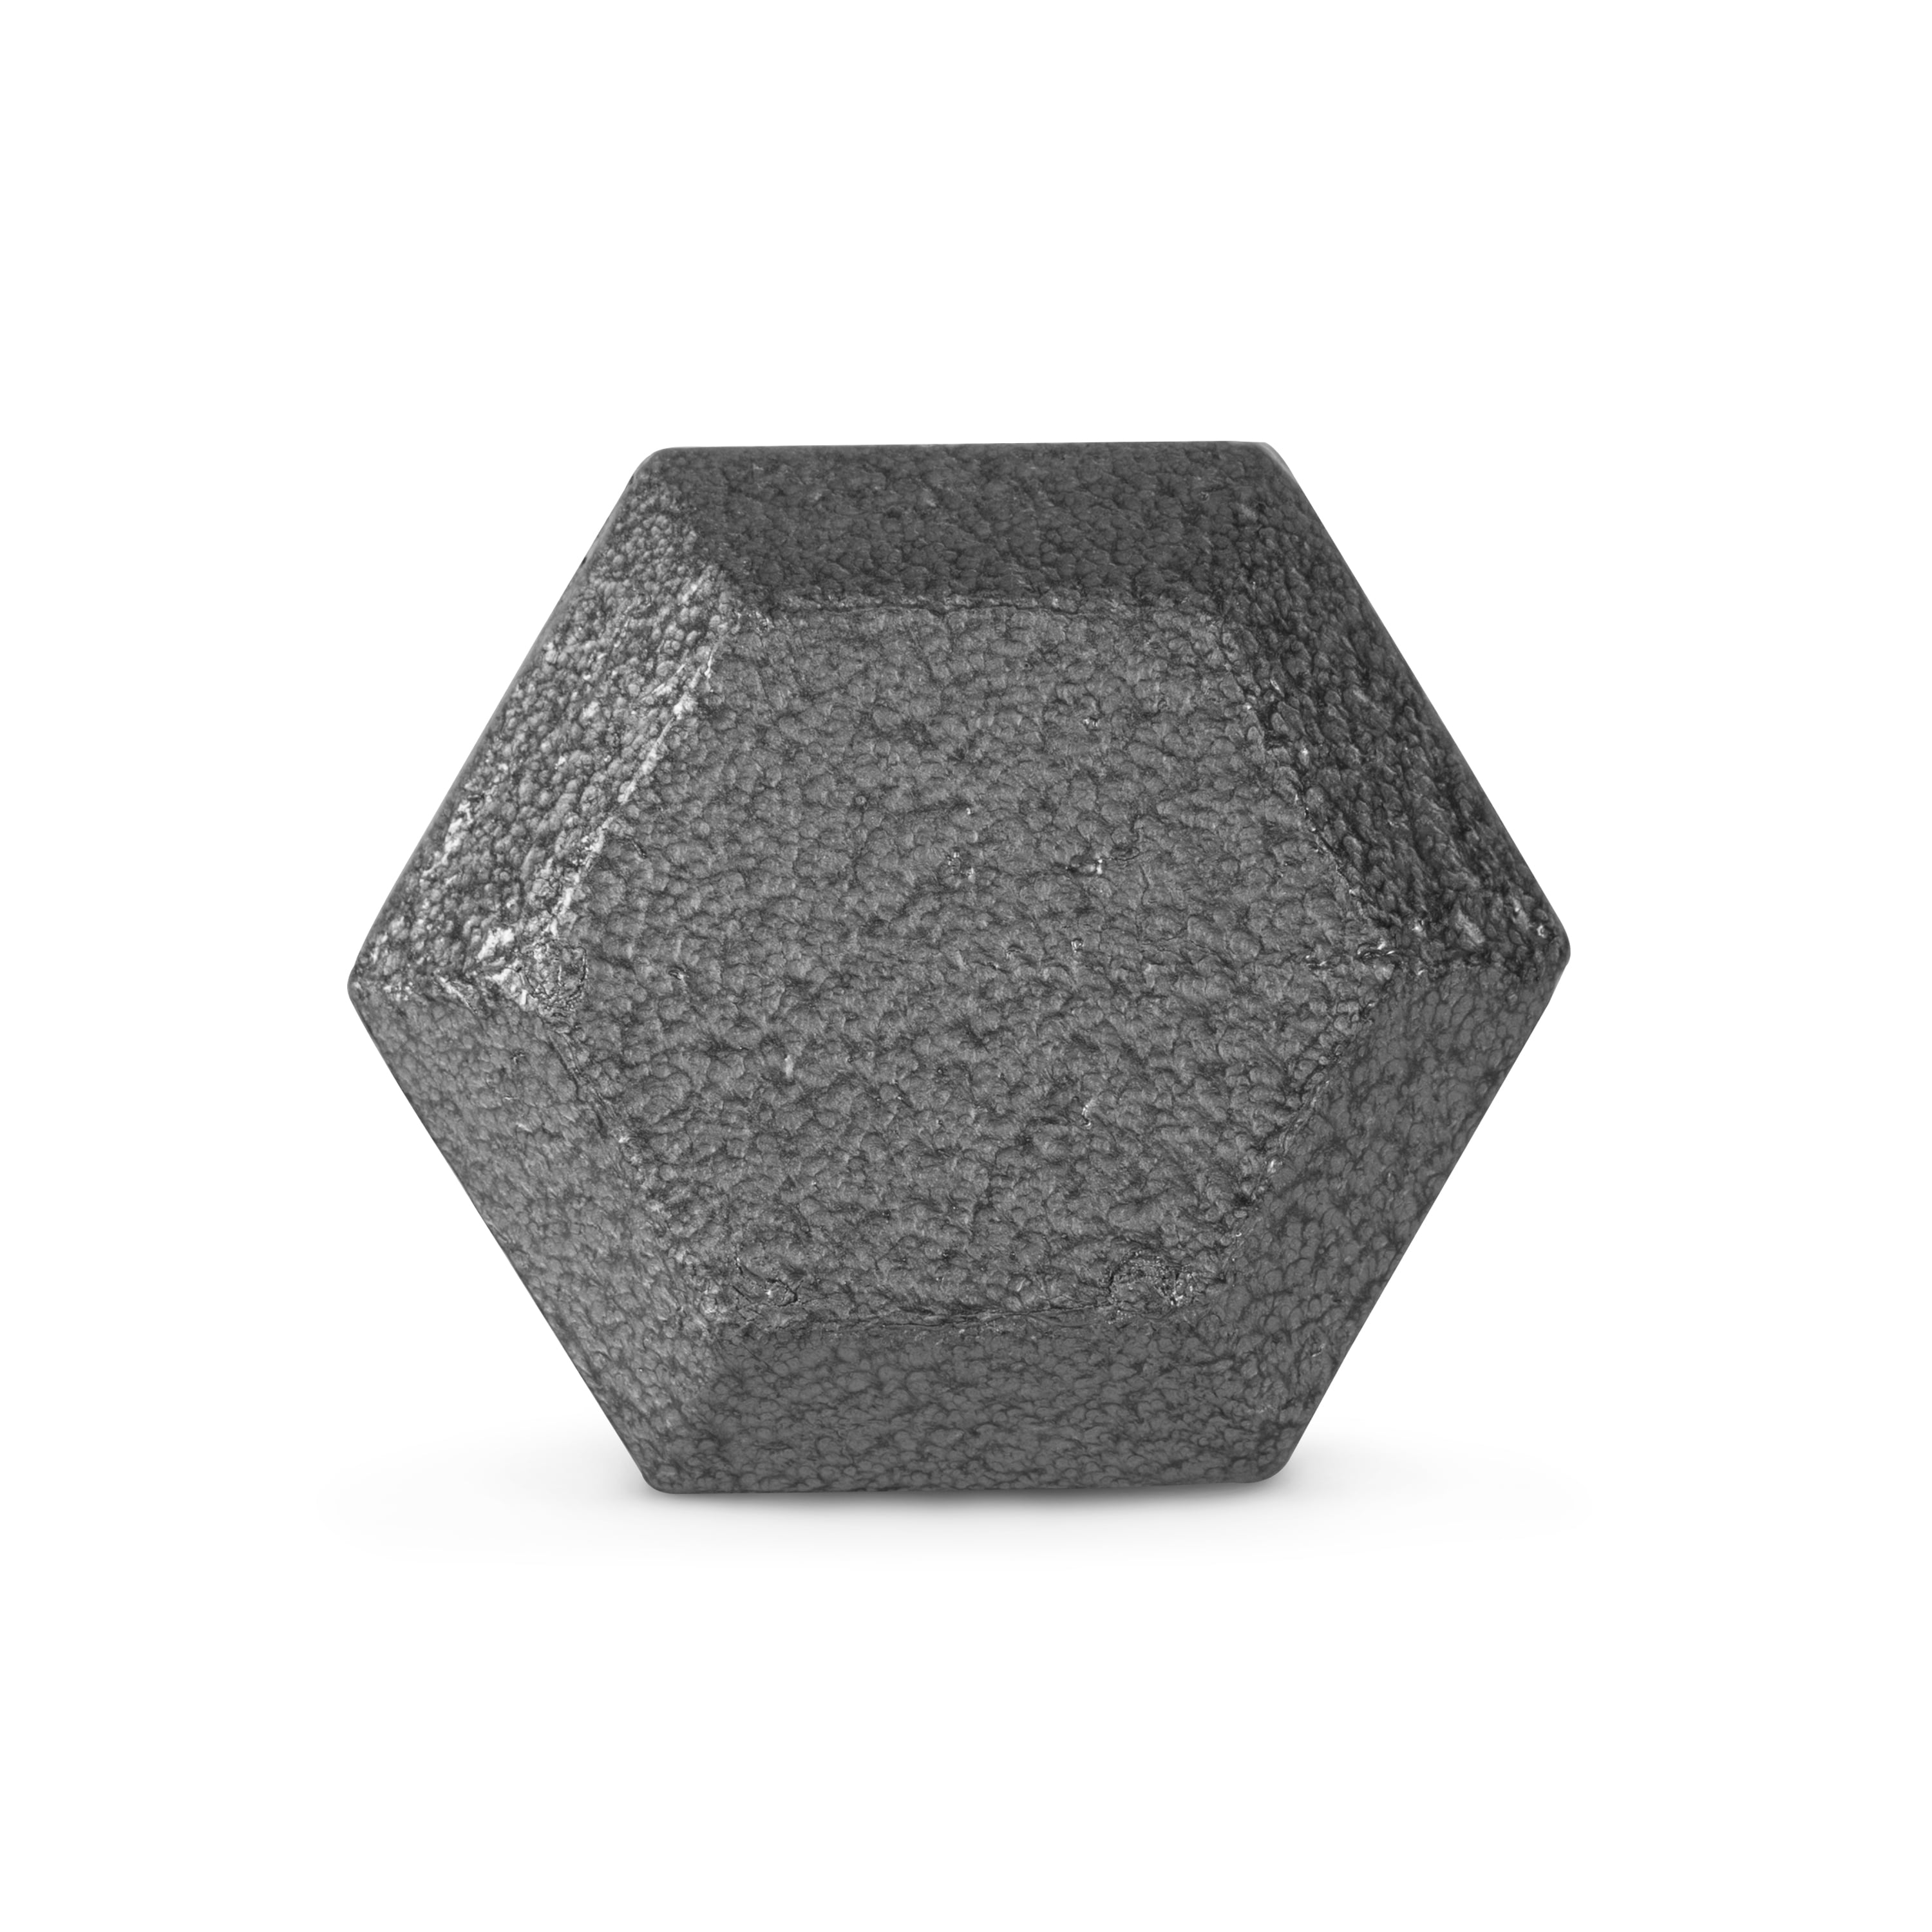 Single CAP Barbell Cast Iron Hexagonal Dumbbell 12 lbs